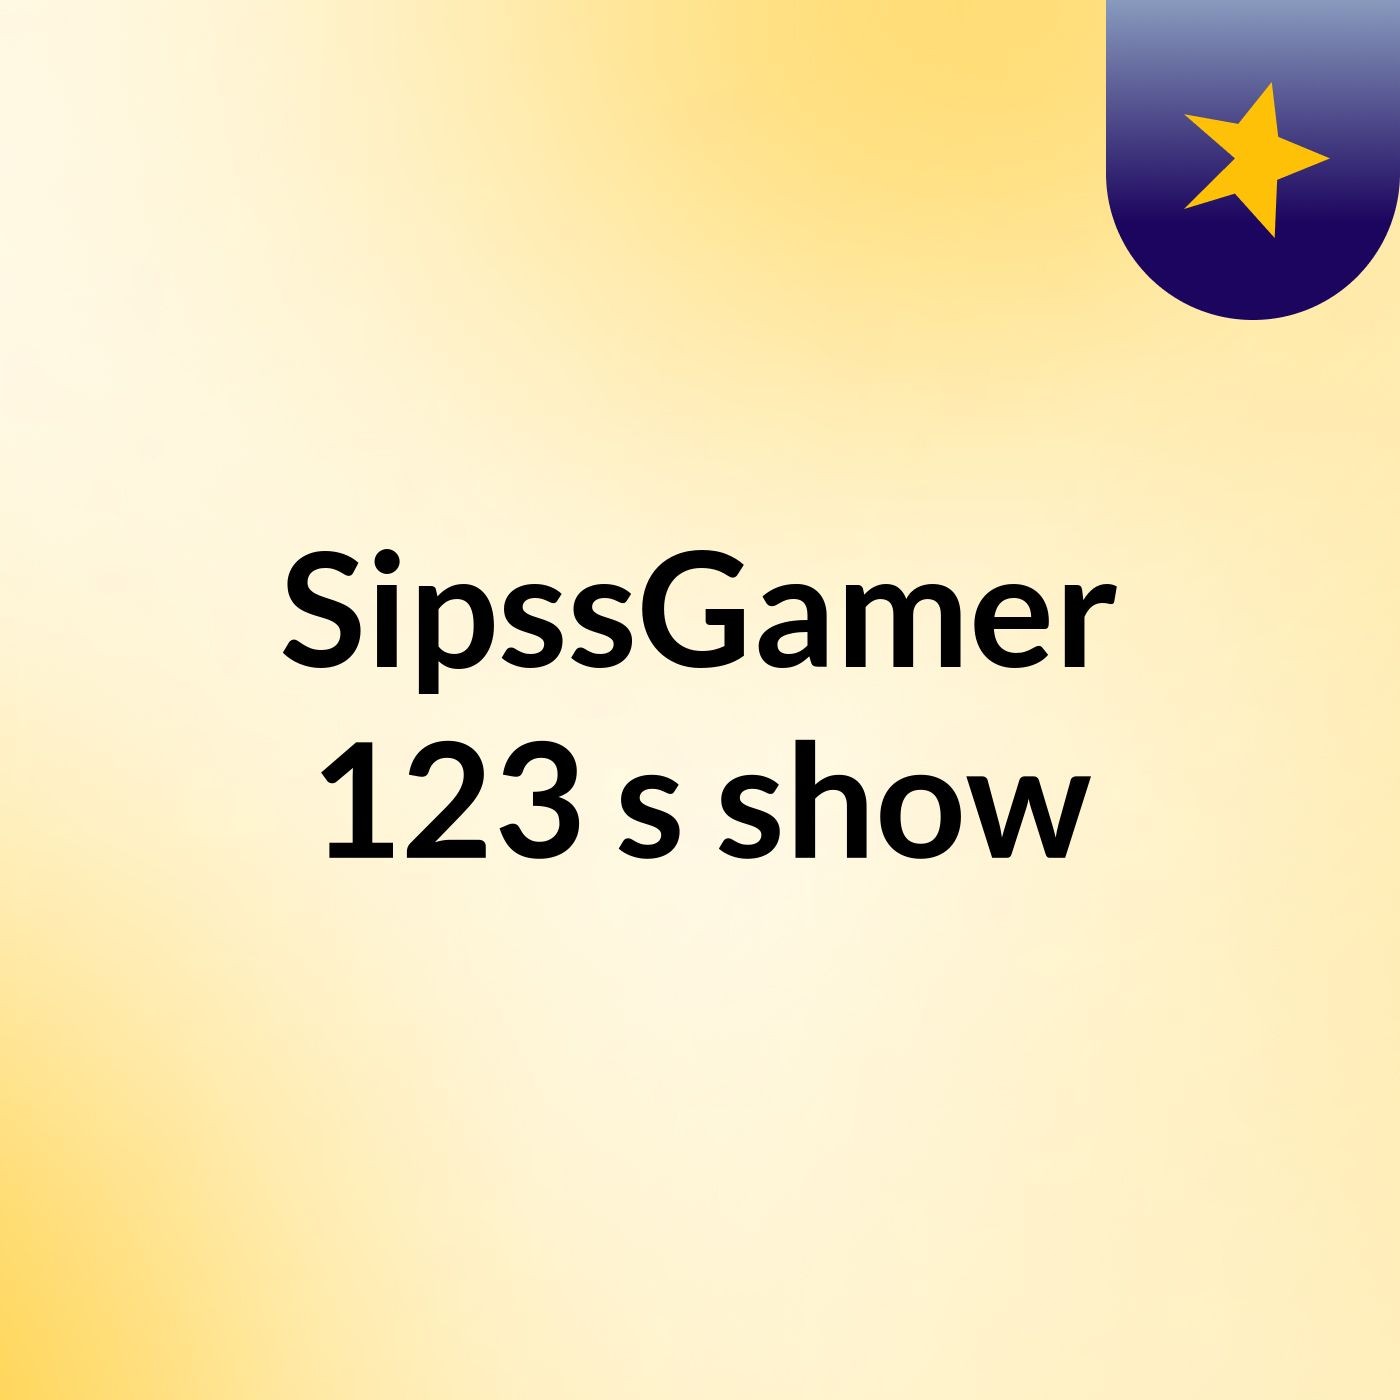 SipssGamer 123's show